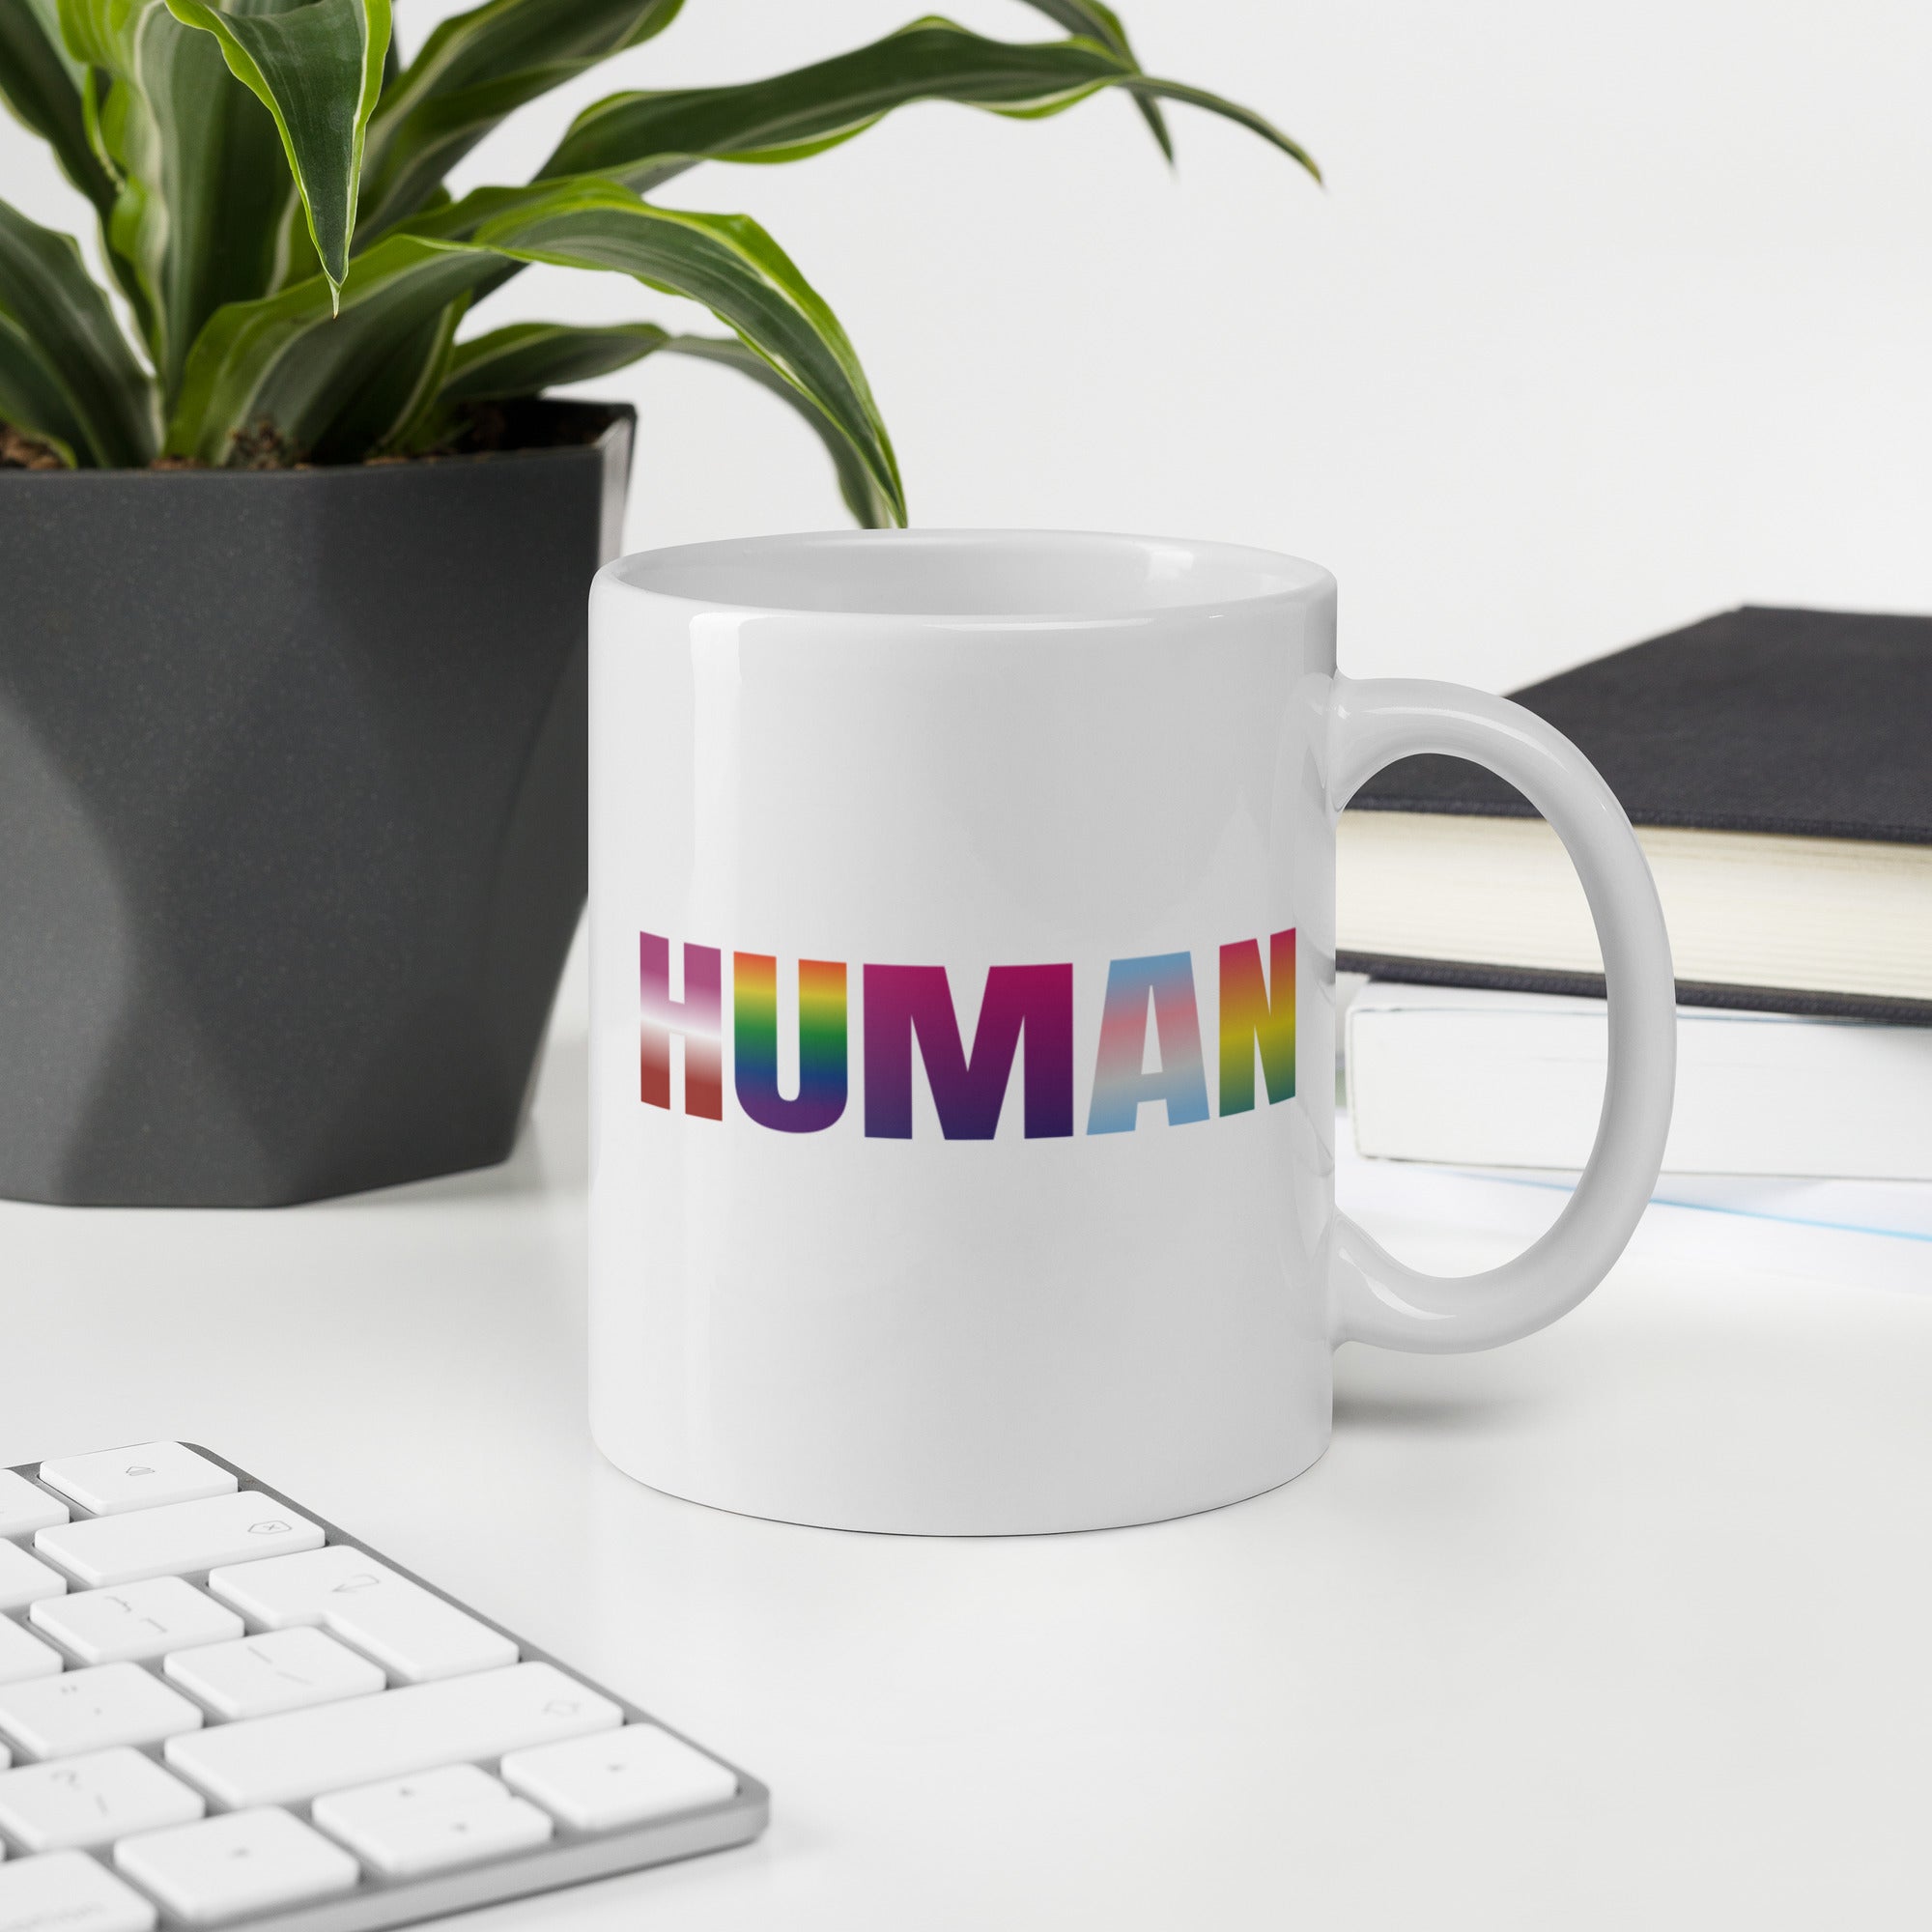 HUMAN - White Glossy Mug